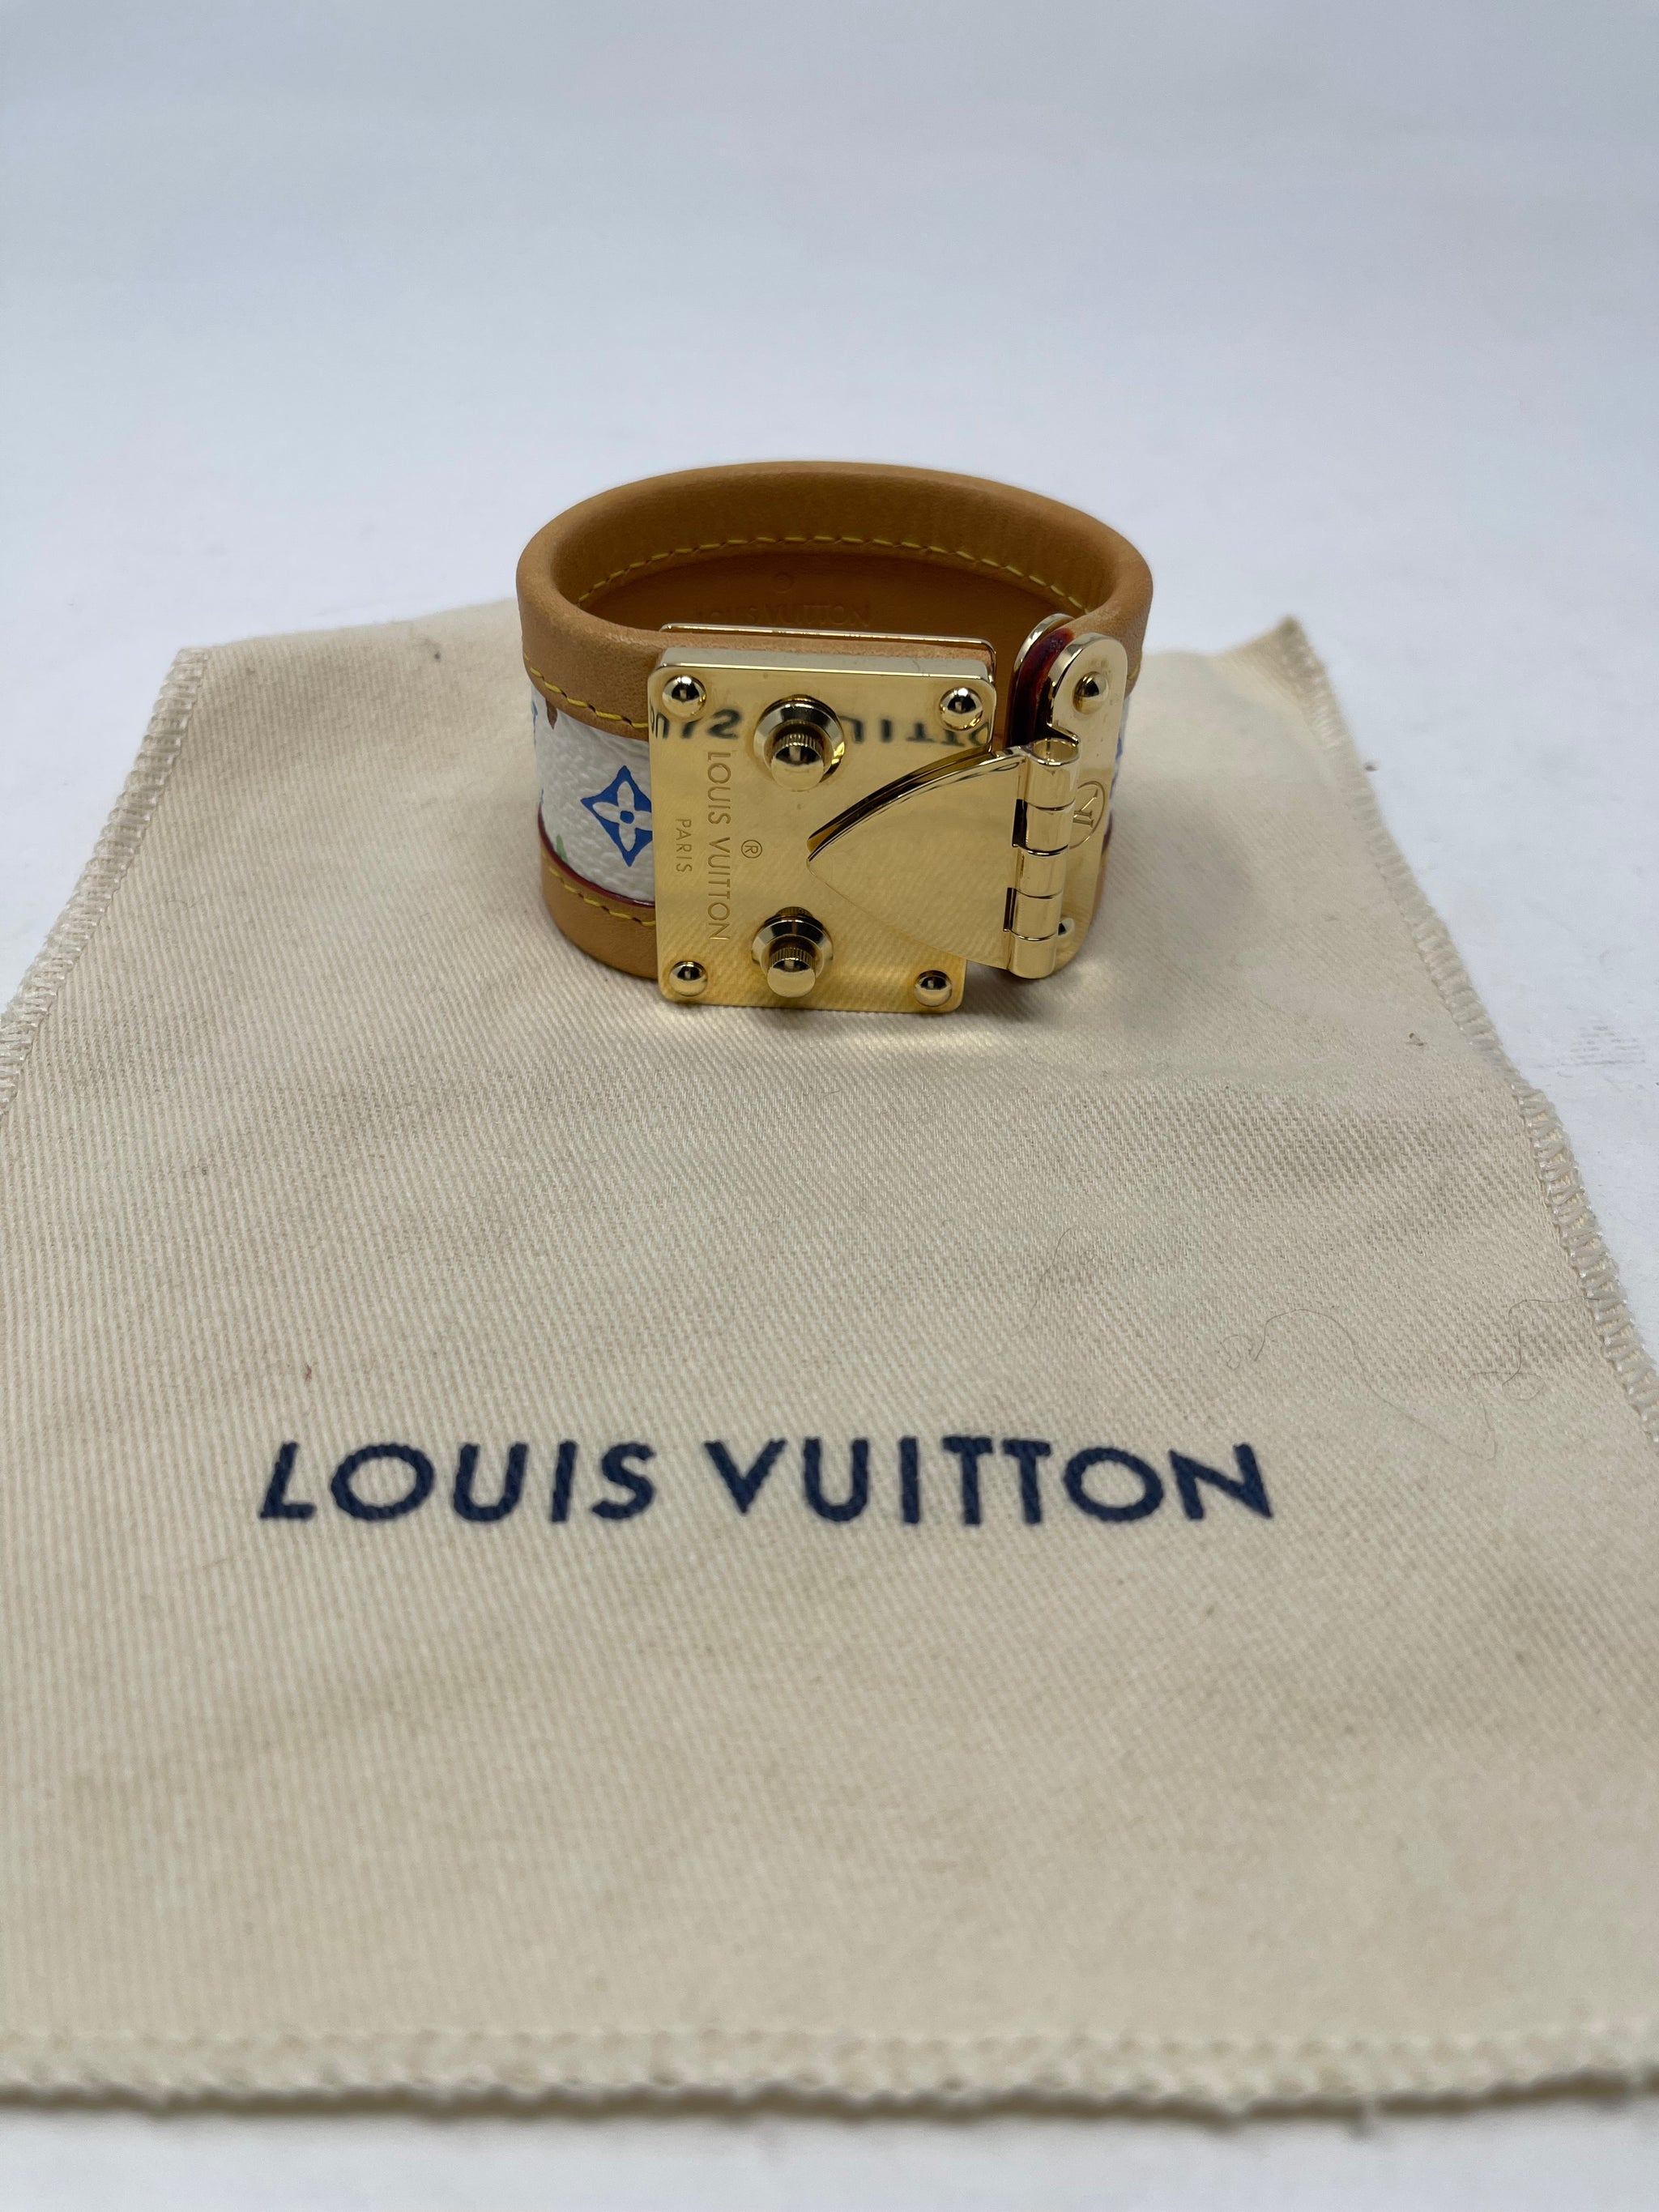 LOUIS VUITTON Bracelet / Leather / Brassley So Louise / Monogram